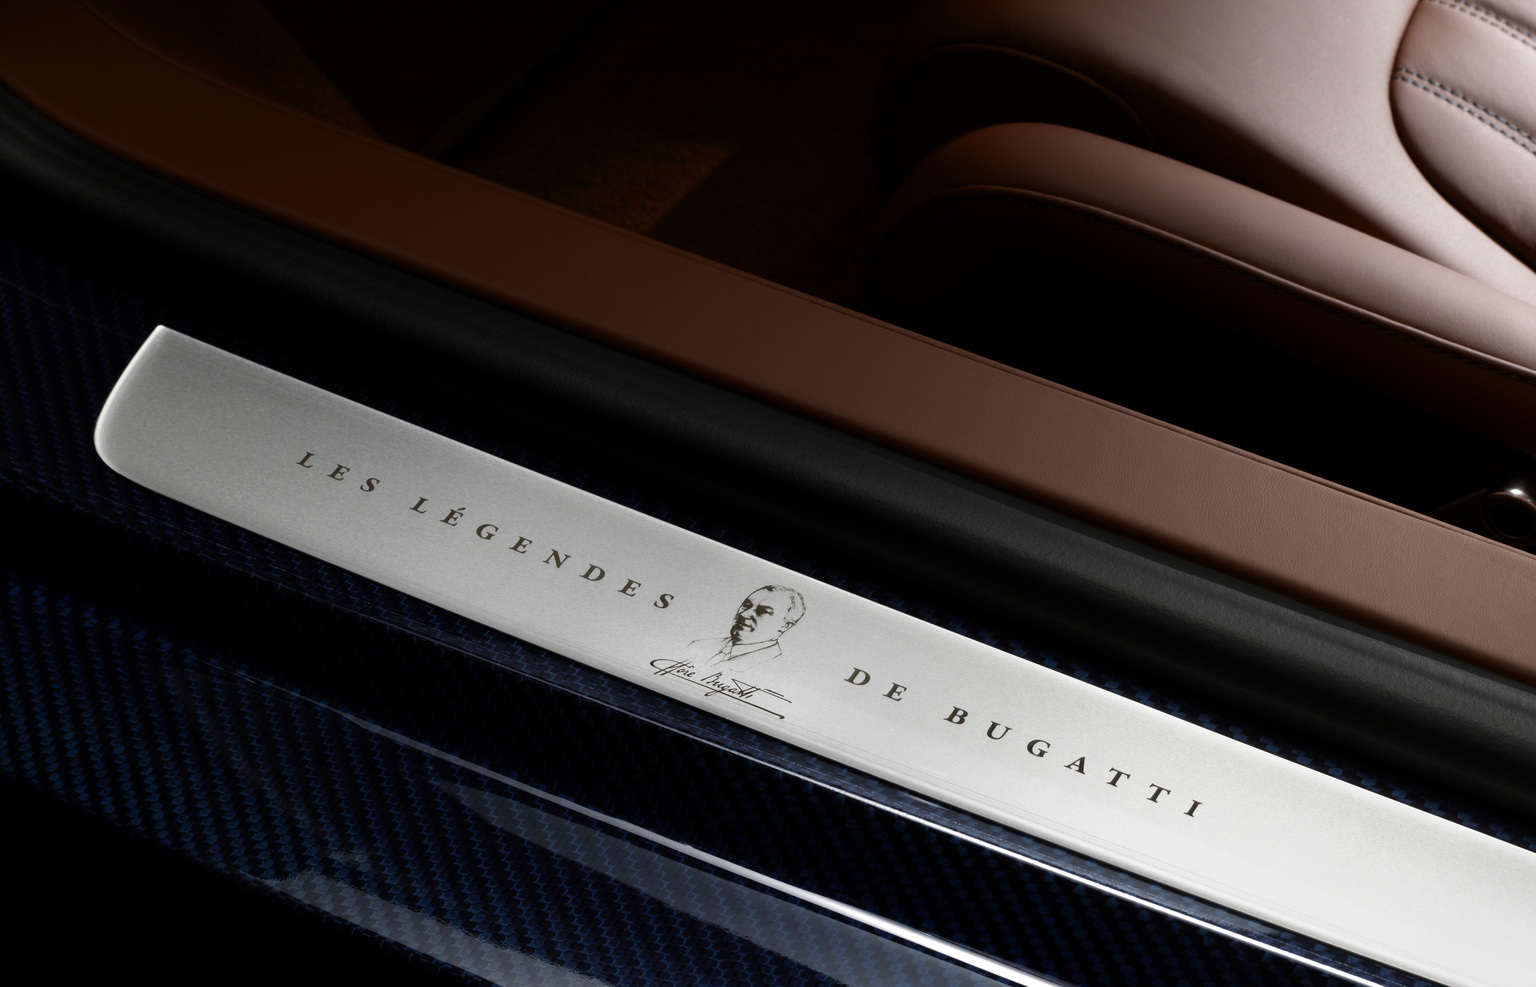 2014 Bugatti 16/4 Veyron Grand Sport Vitesse ‘Ettore Bugatti’